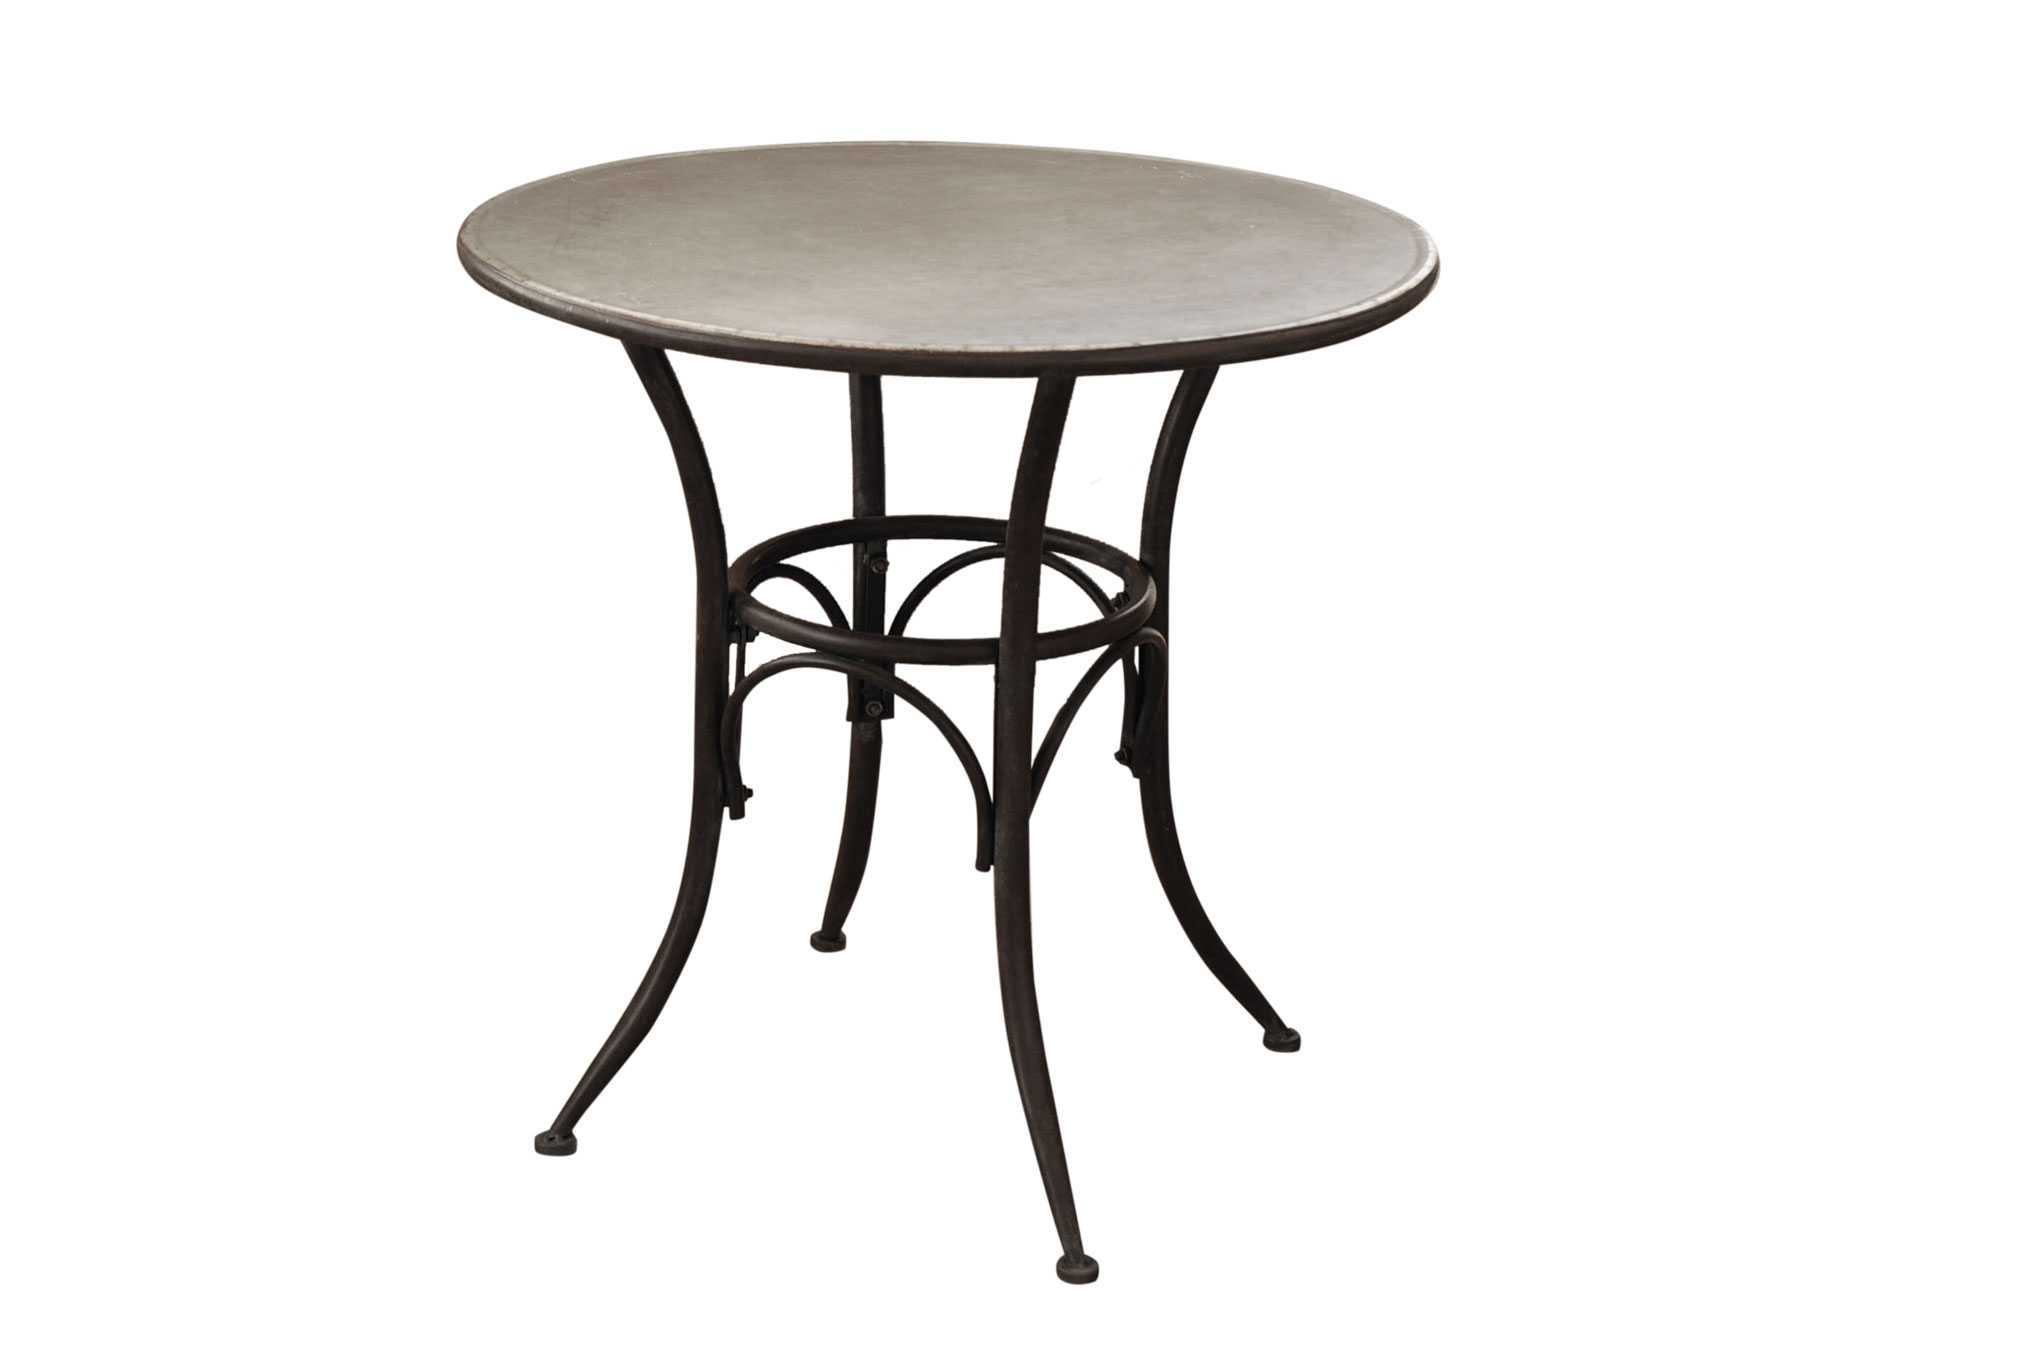 TABLE AMANDINE in the group Garden & Greenhouse / Furniture at Miljögården (500185)